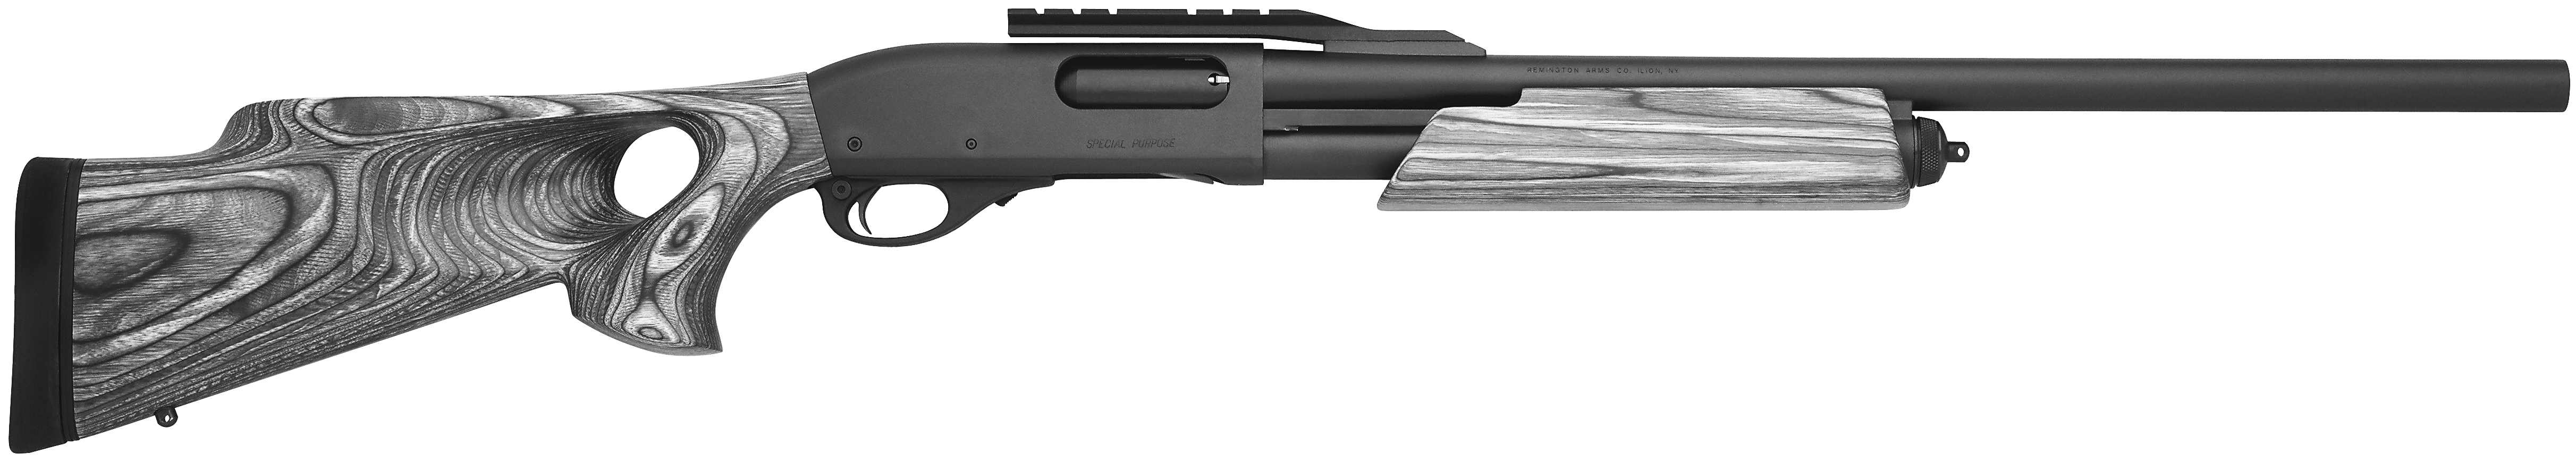 Remington 870 Special Purpose Thumbhole